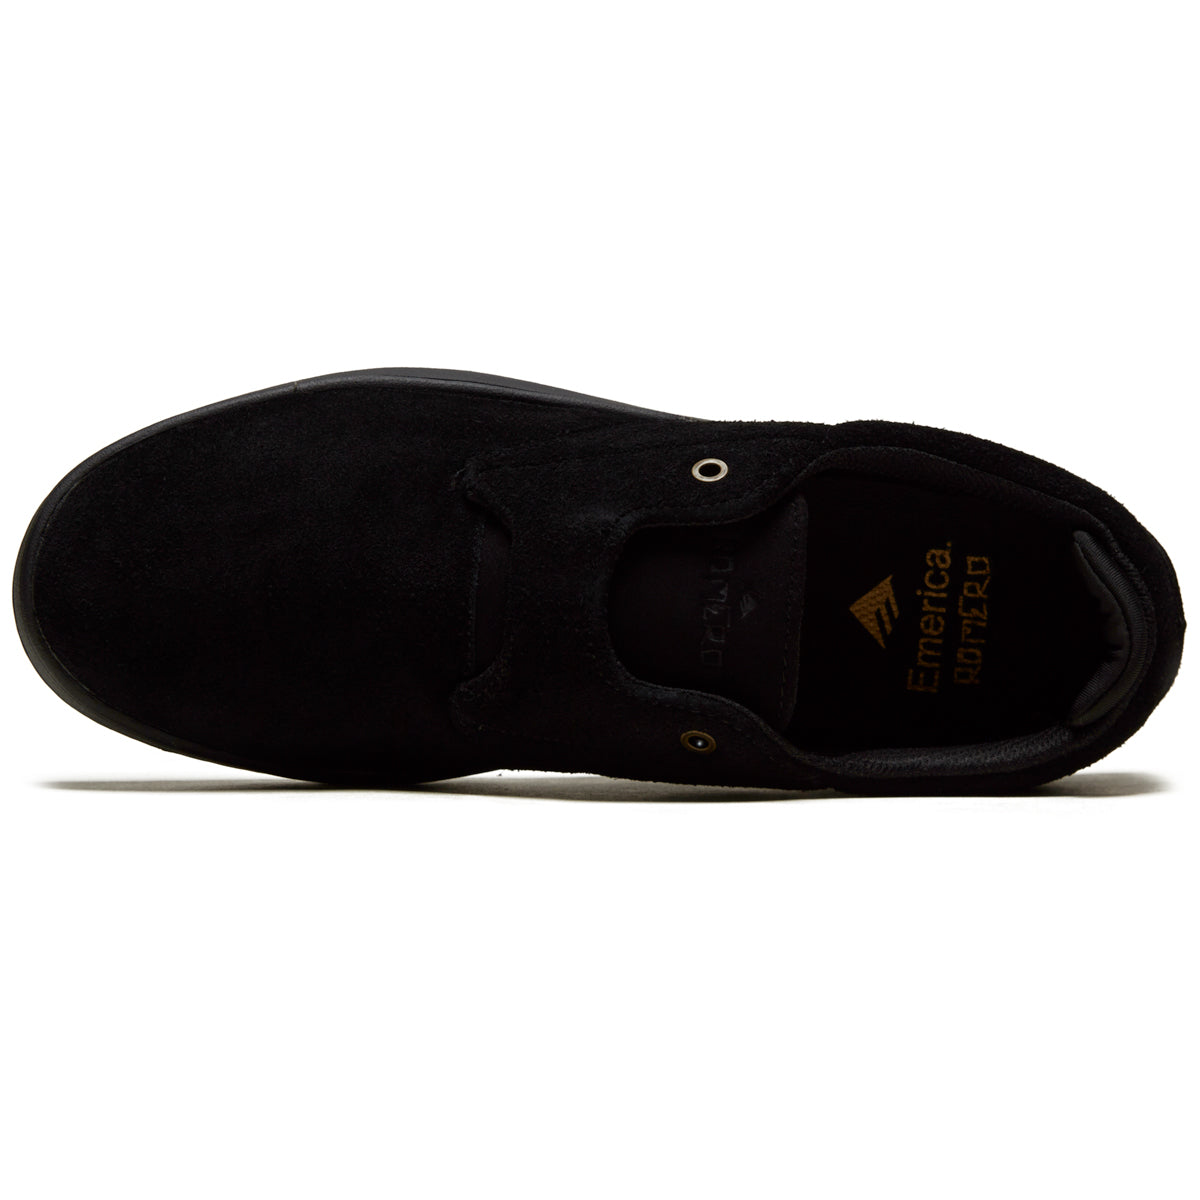 Emerica Romero Skater Shoes - Black image 3